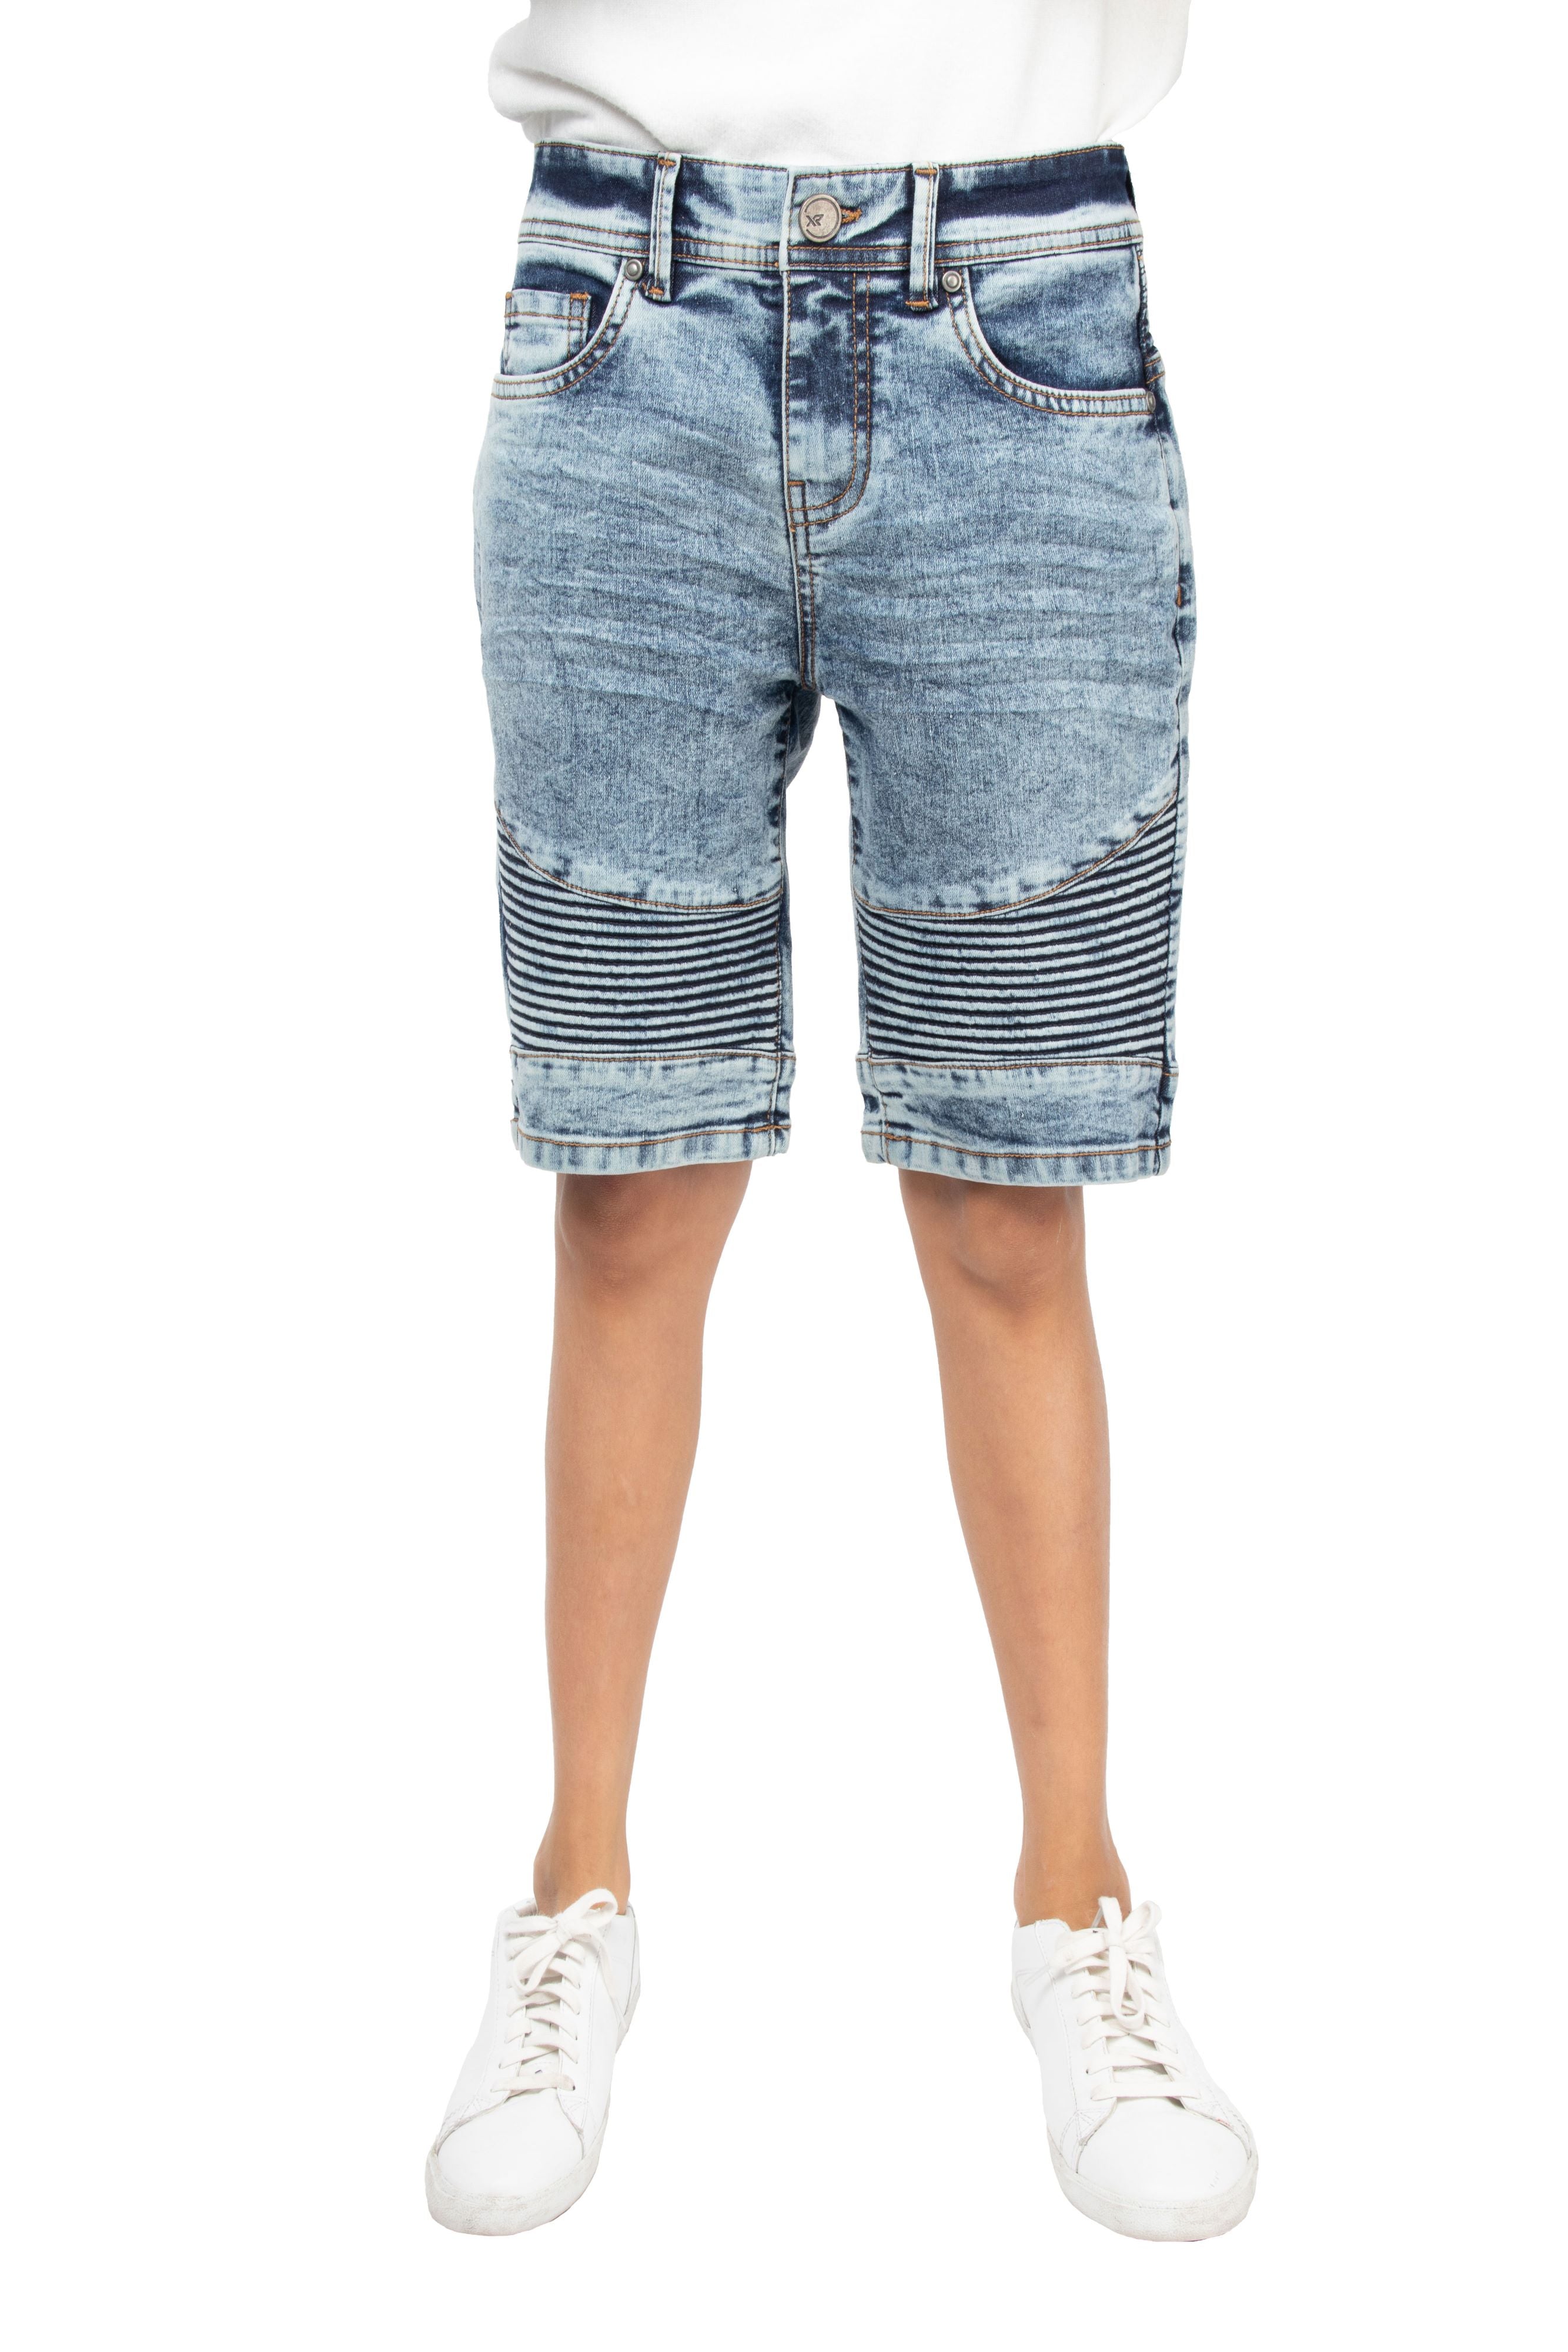 Four Pocket Jeans Pants for Boys -Boys Stylish Denim Jeans Pants/Boys Denim  Jeans | Comfortable